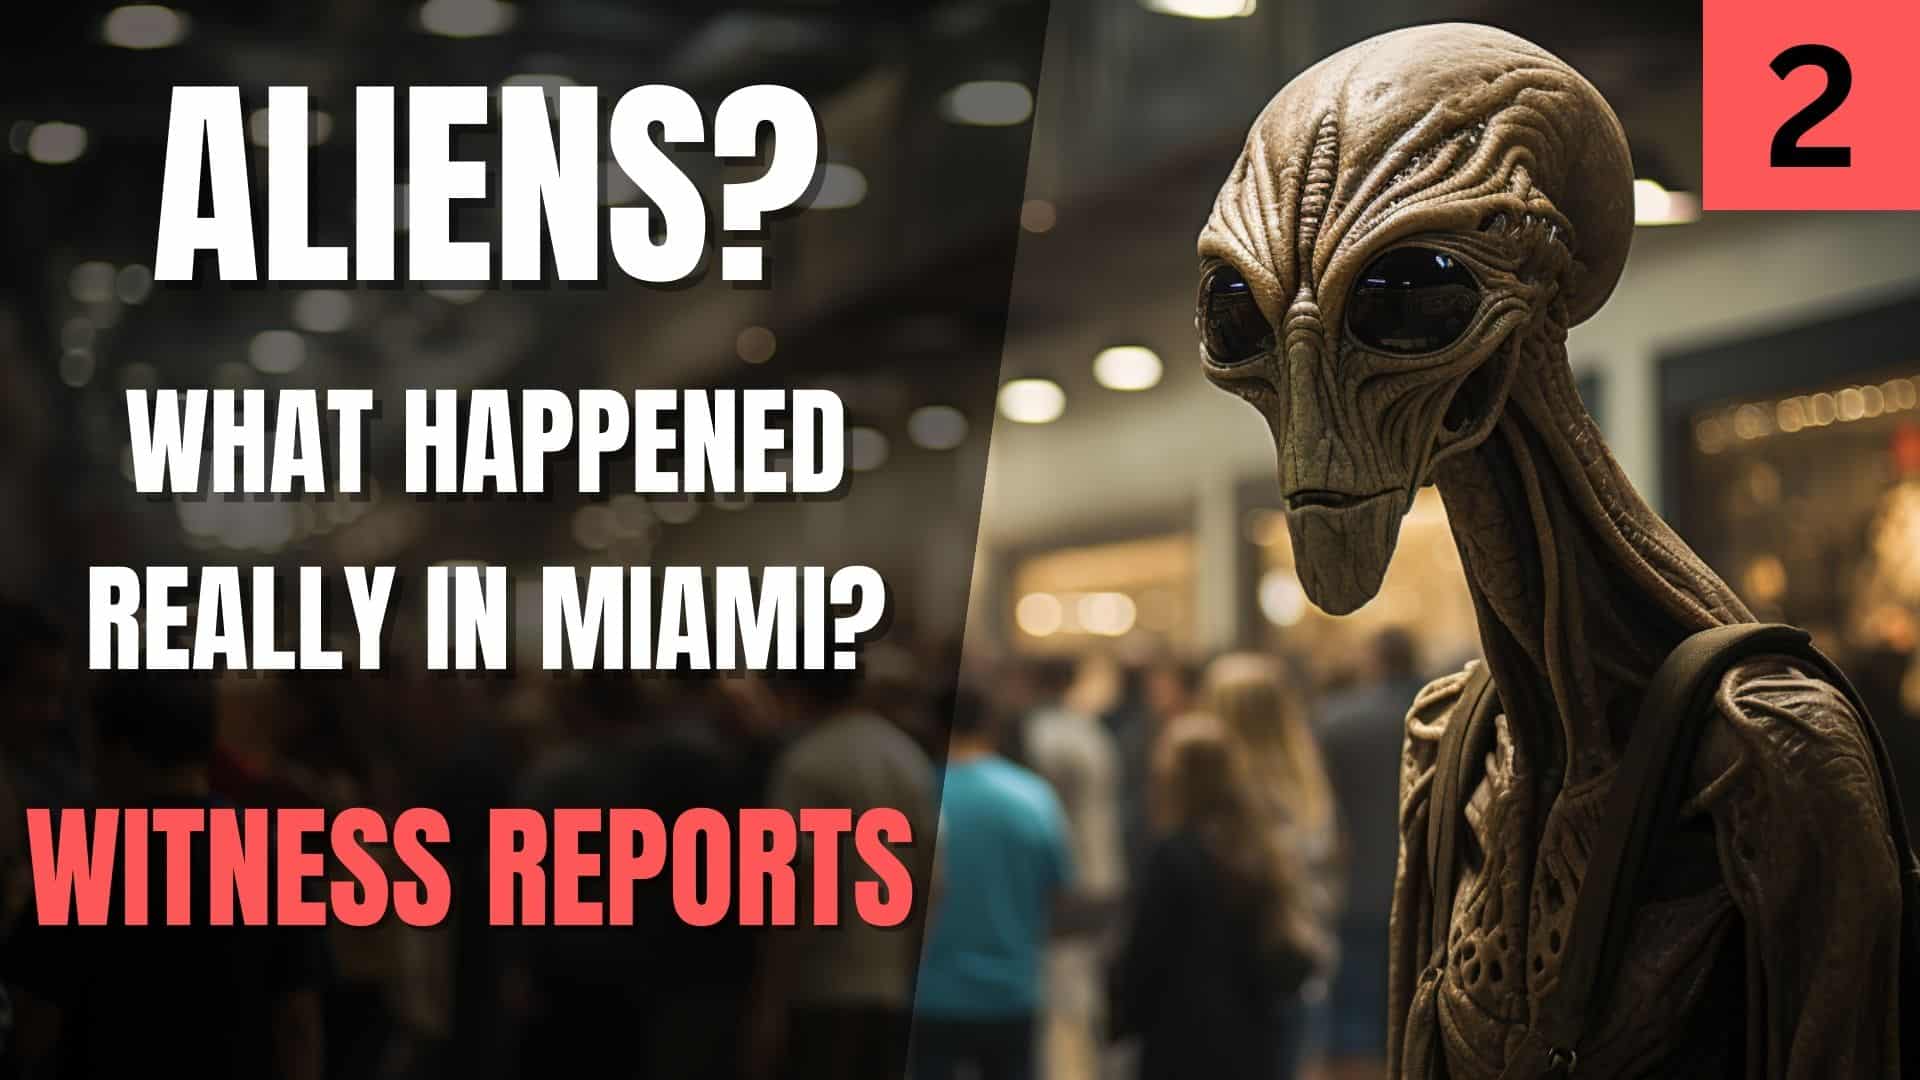 miami mall aliens miami witness reports